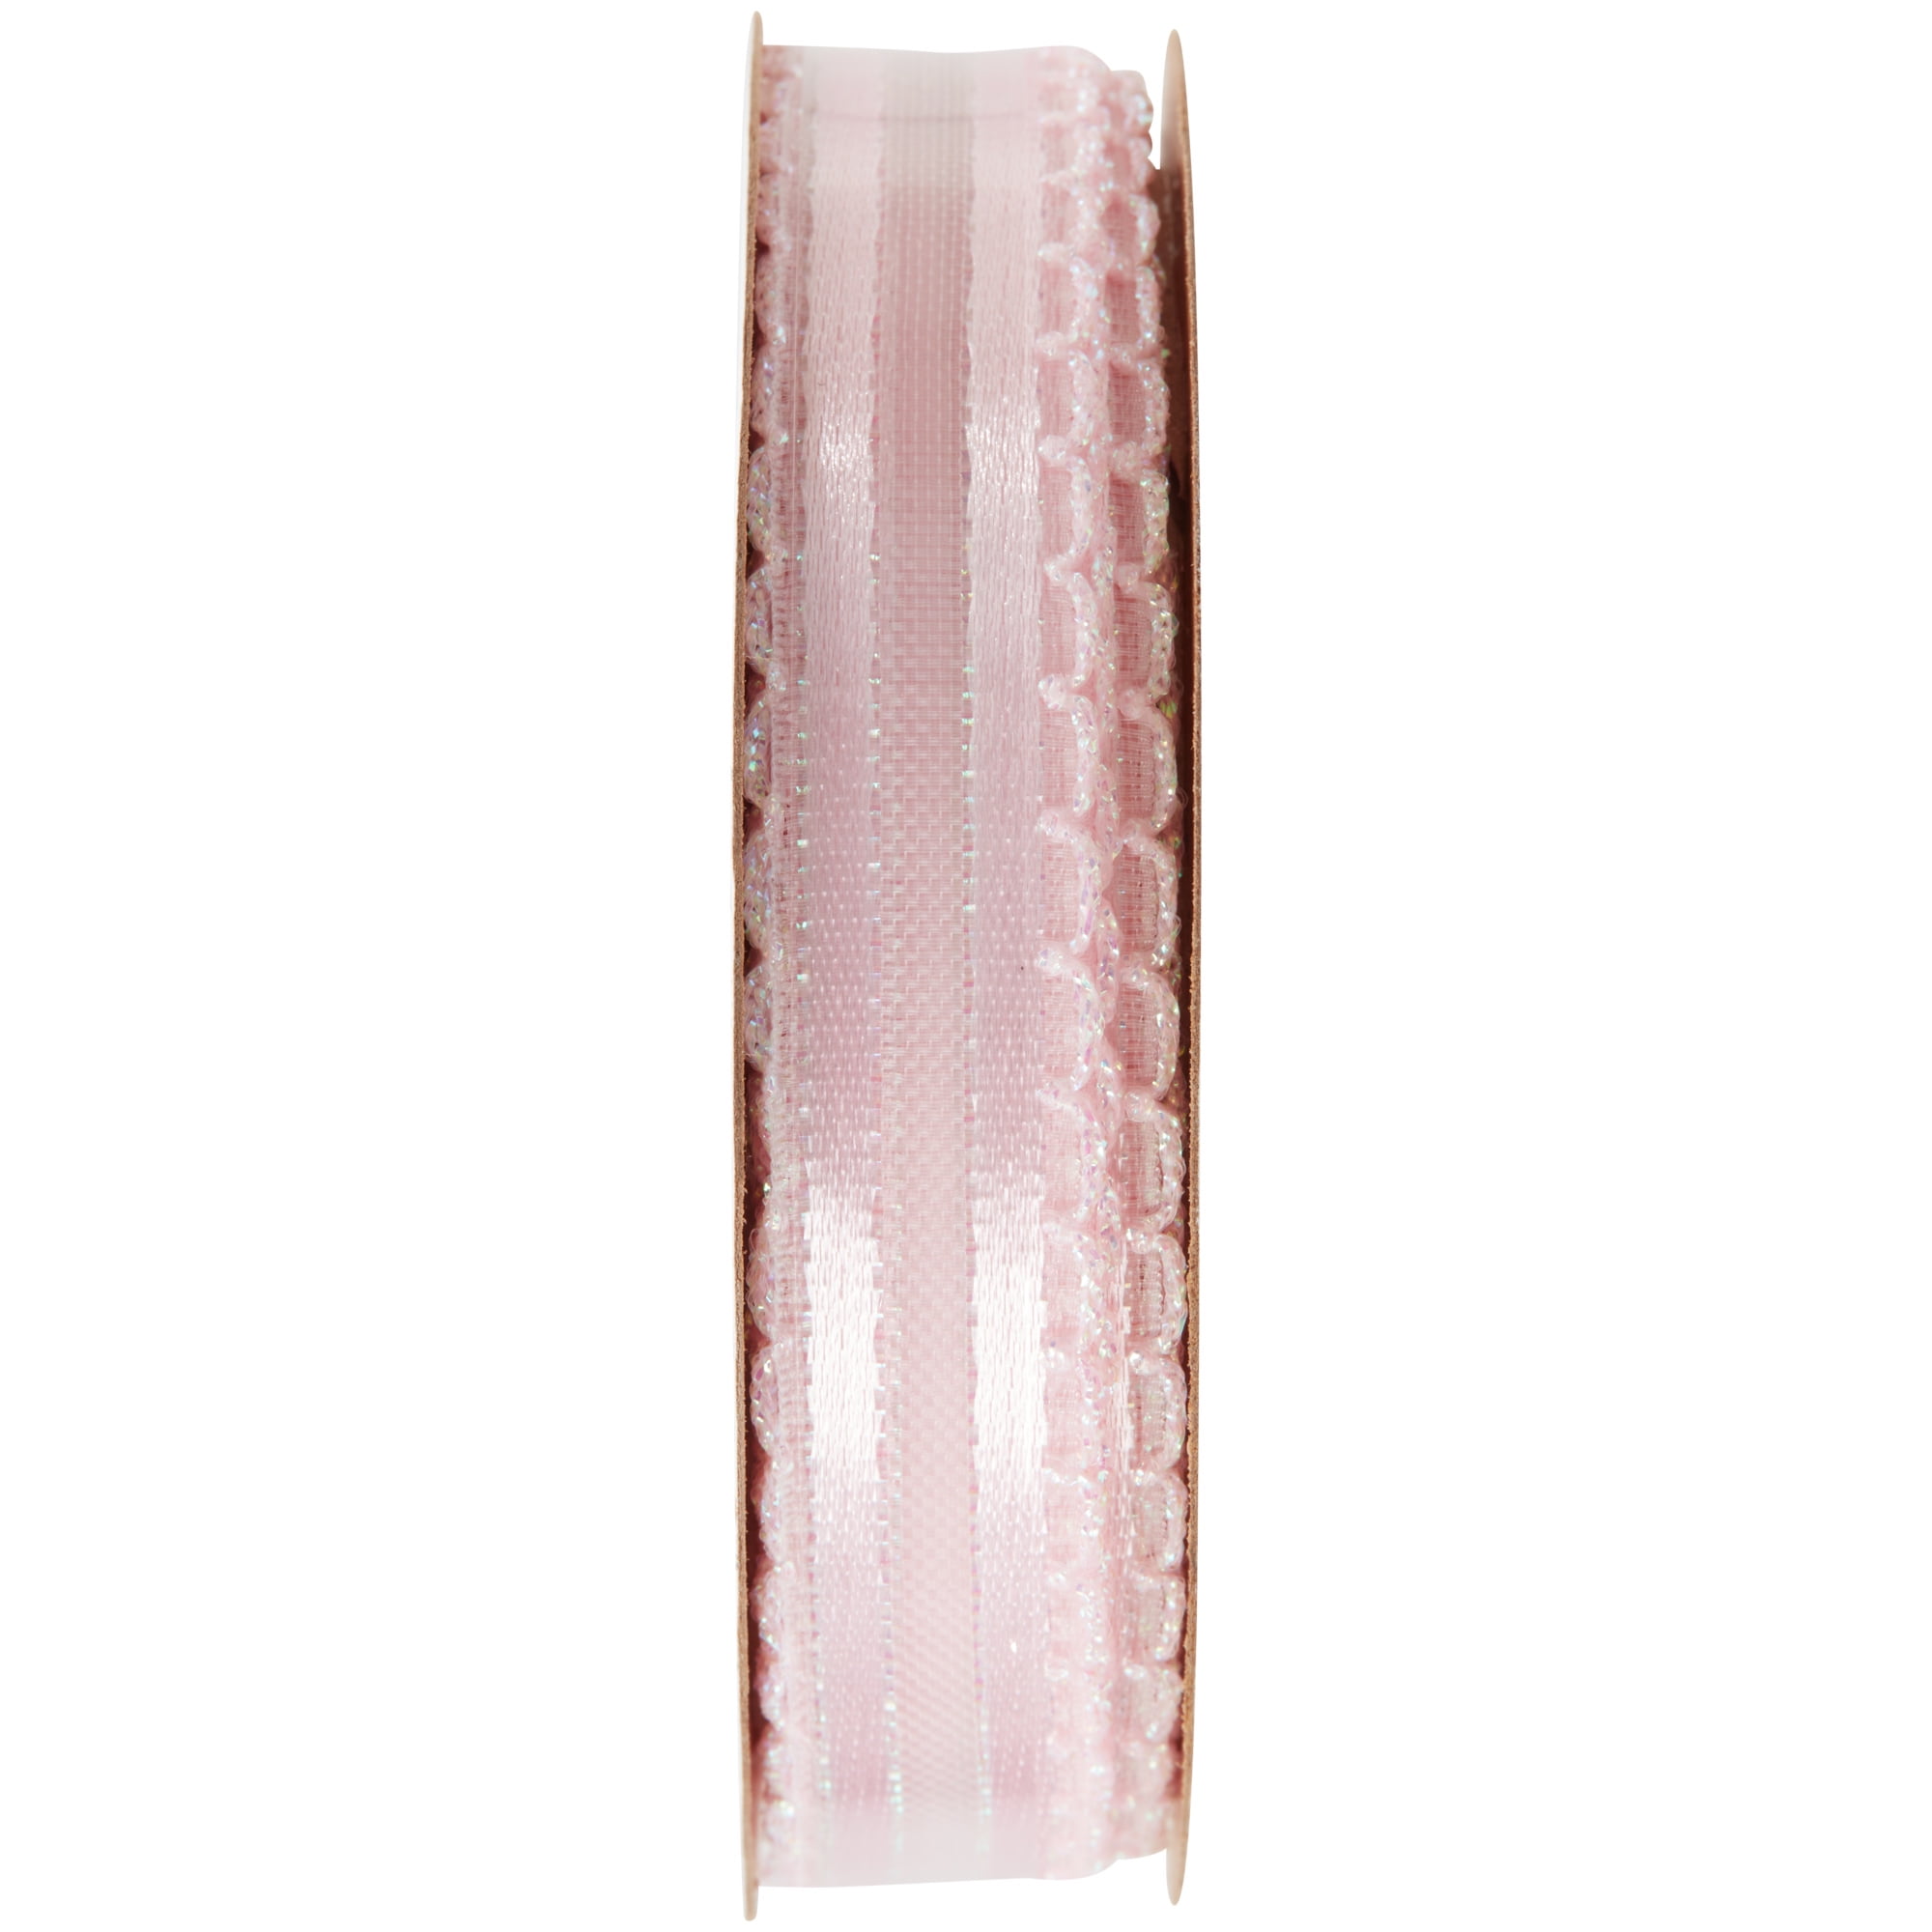 2 yards Sheer Pink Chiffon Ribbon 5/8 inch wide